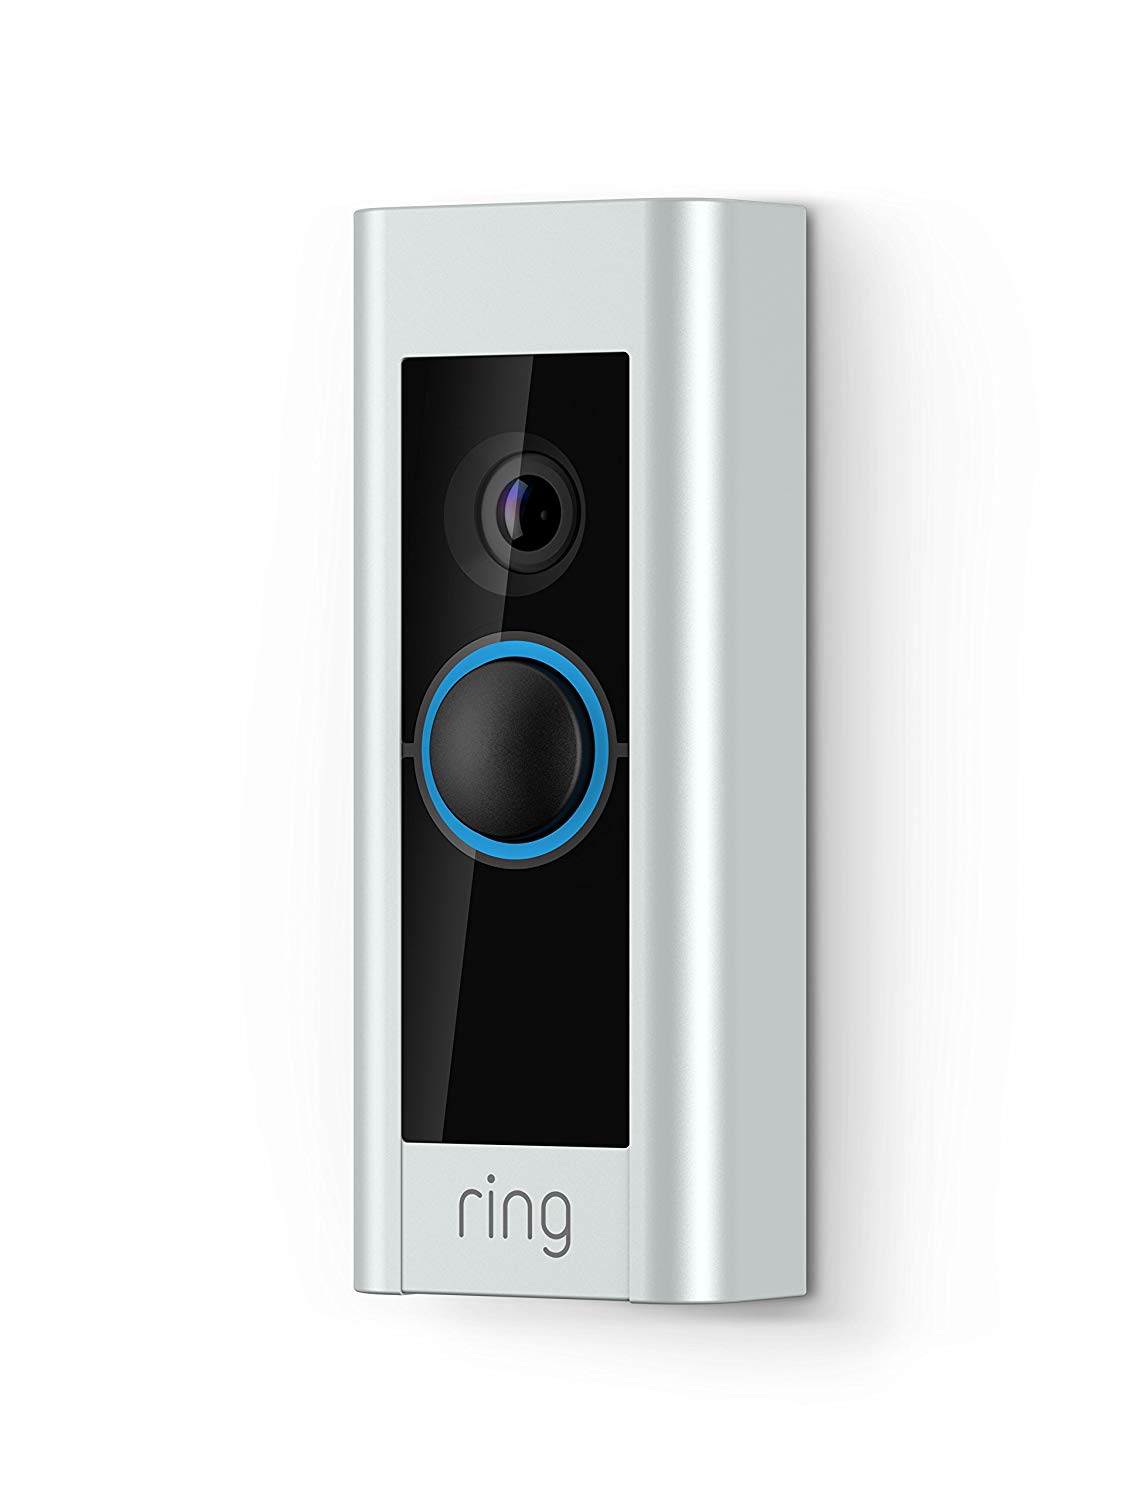 ring doorbell for google home